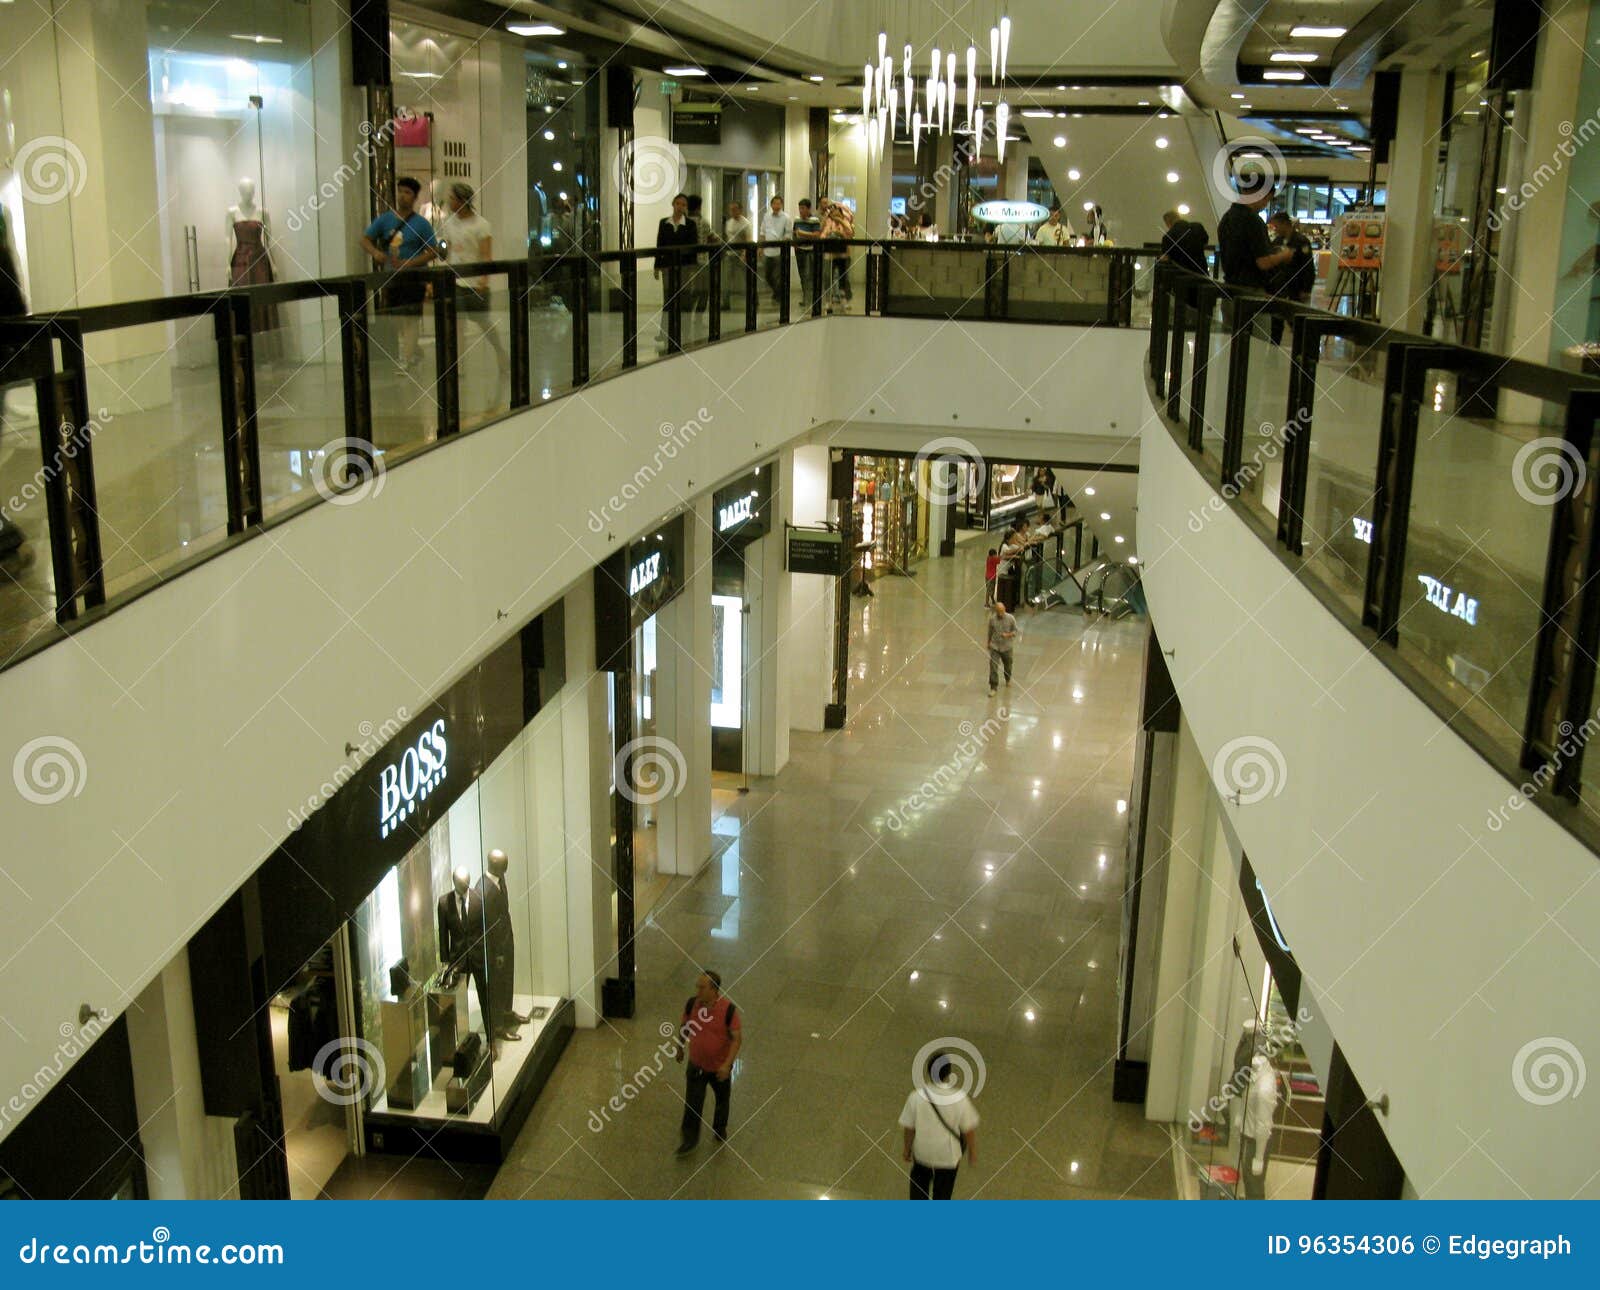 Manila, Greenbelt shopping mall, Deortiz